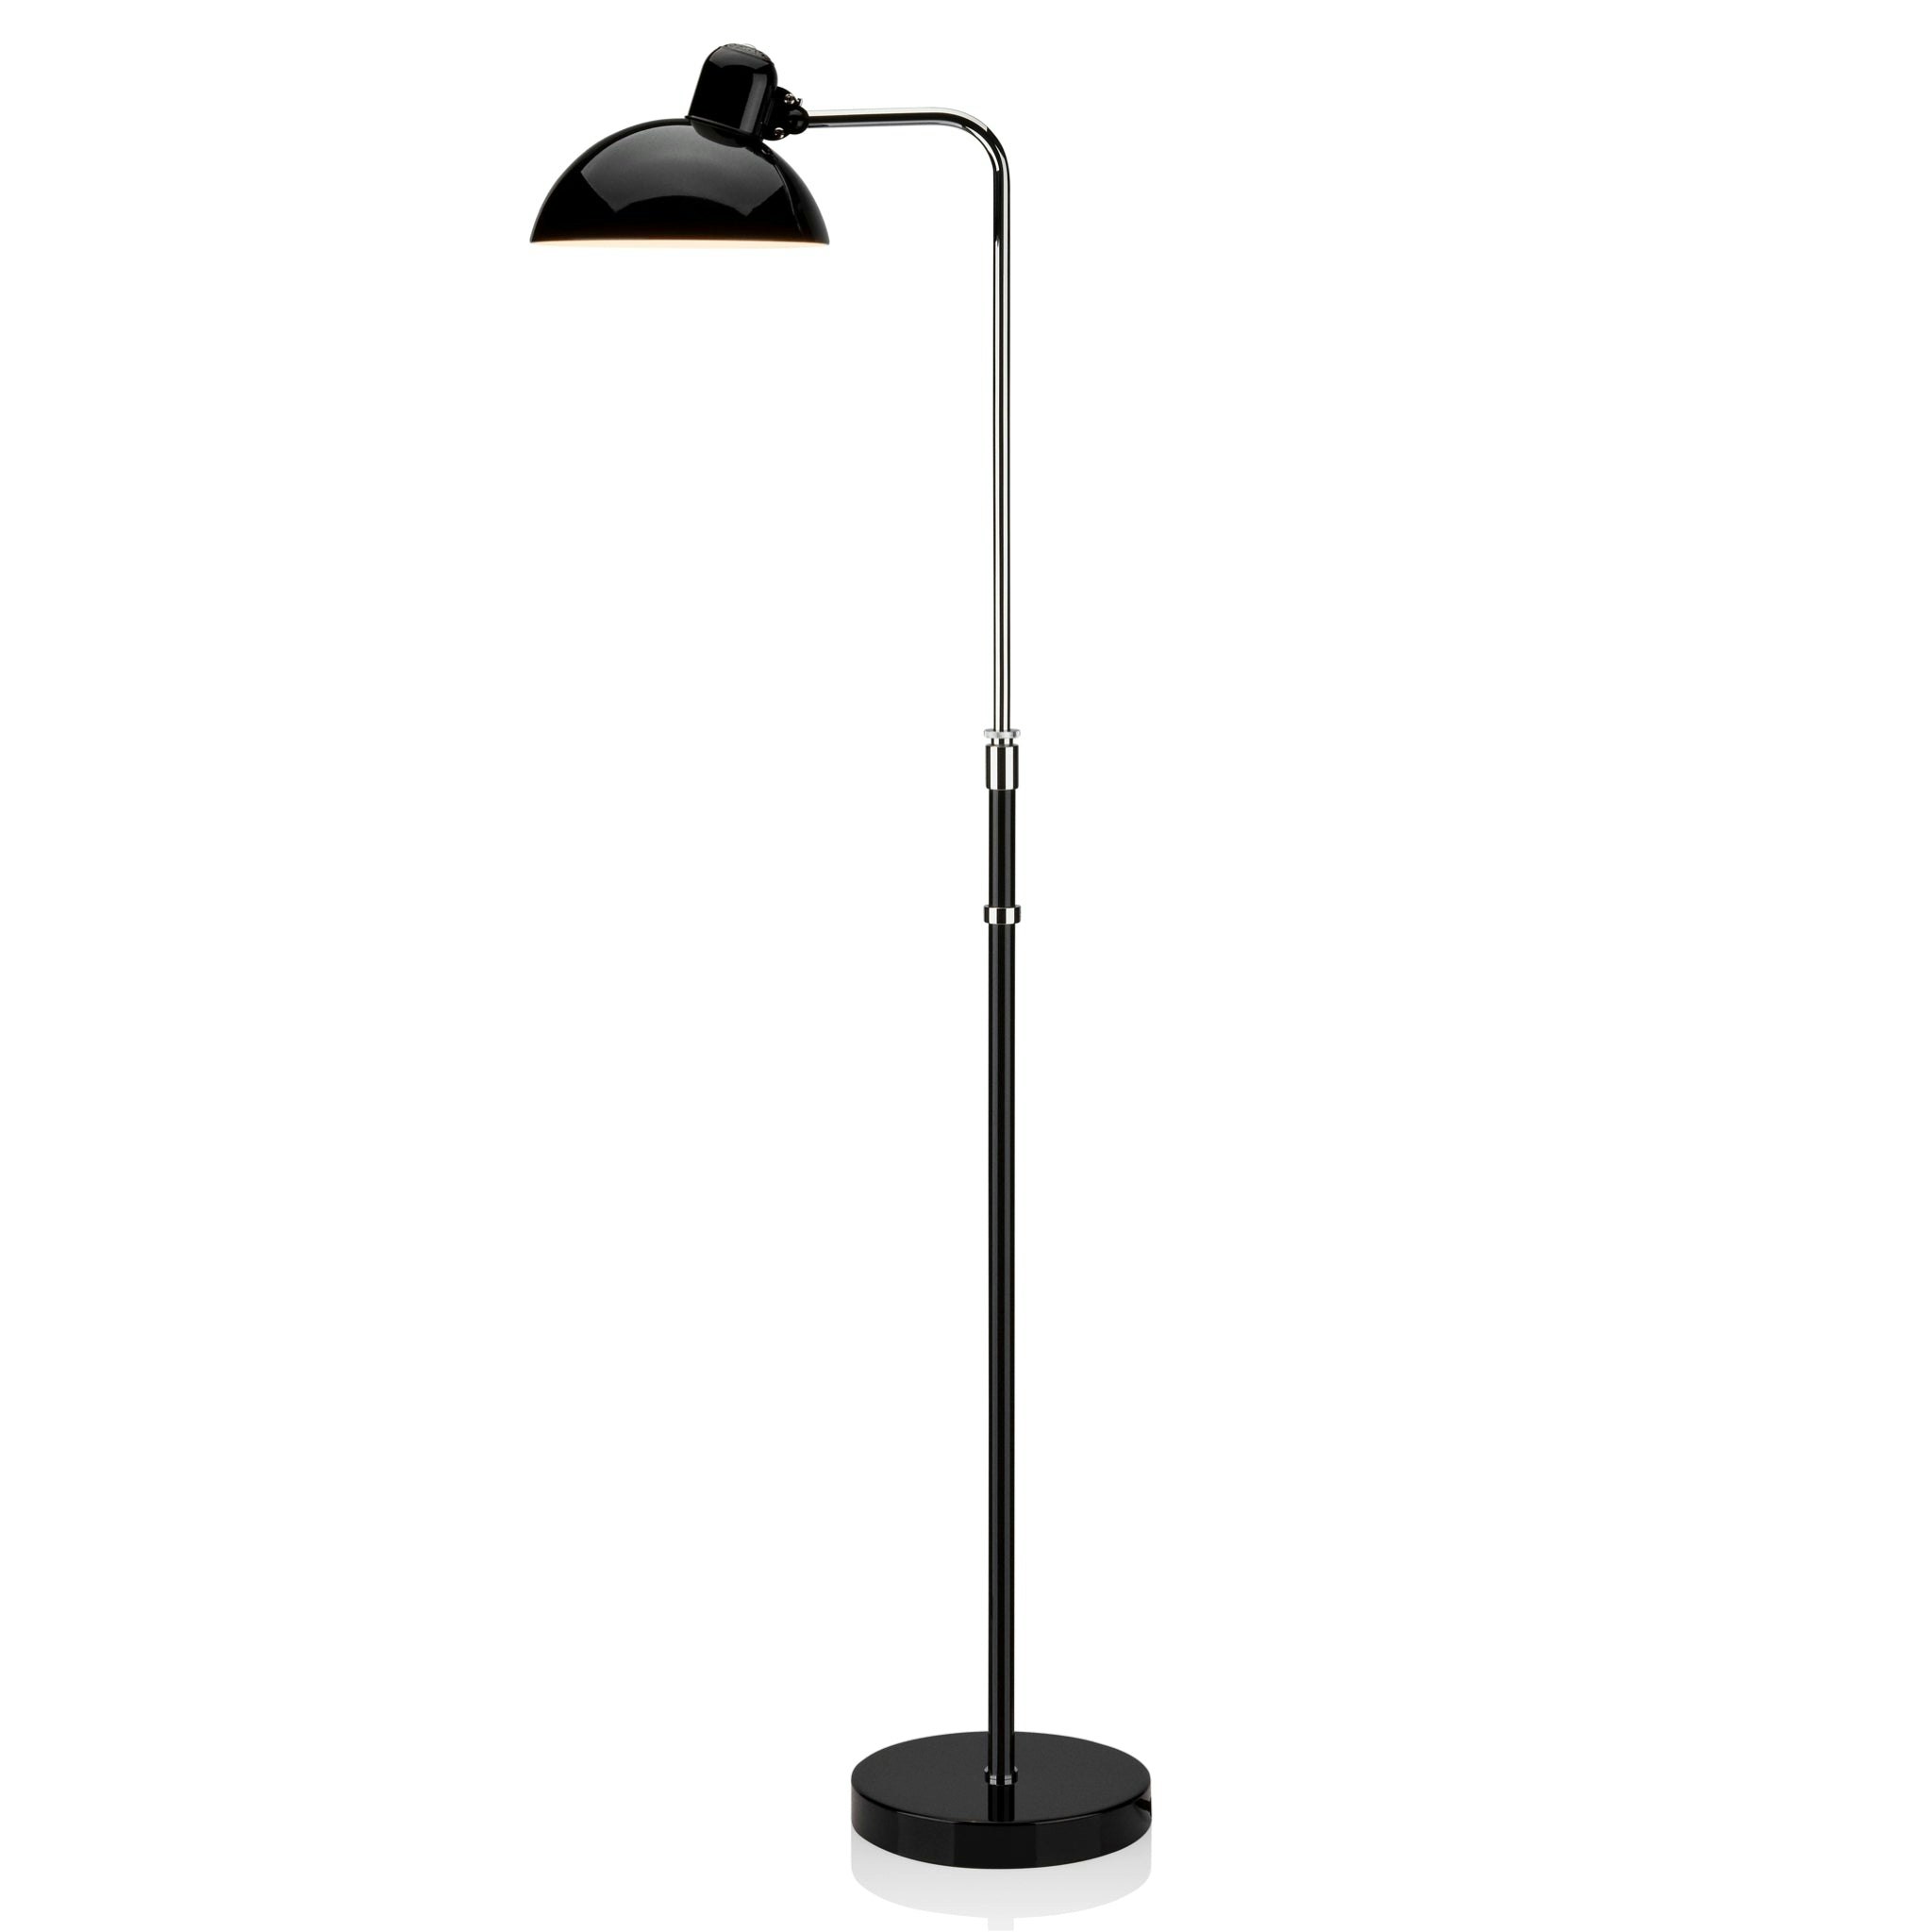 Kaiser Idell Luxus Floor Lamp by Fritz Hansen